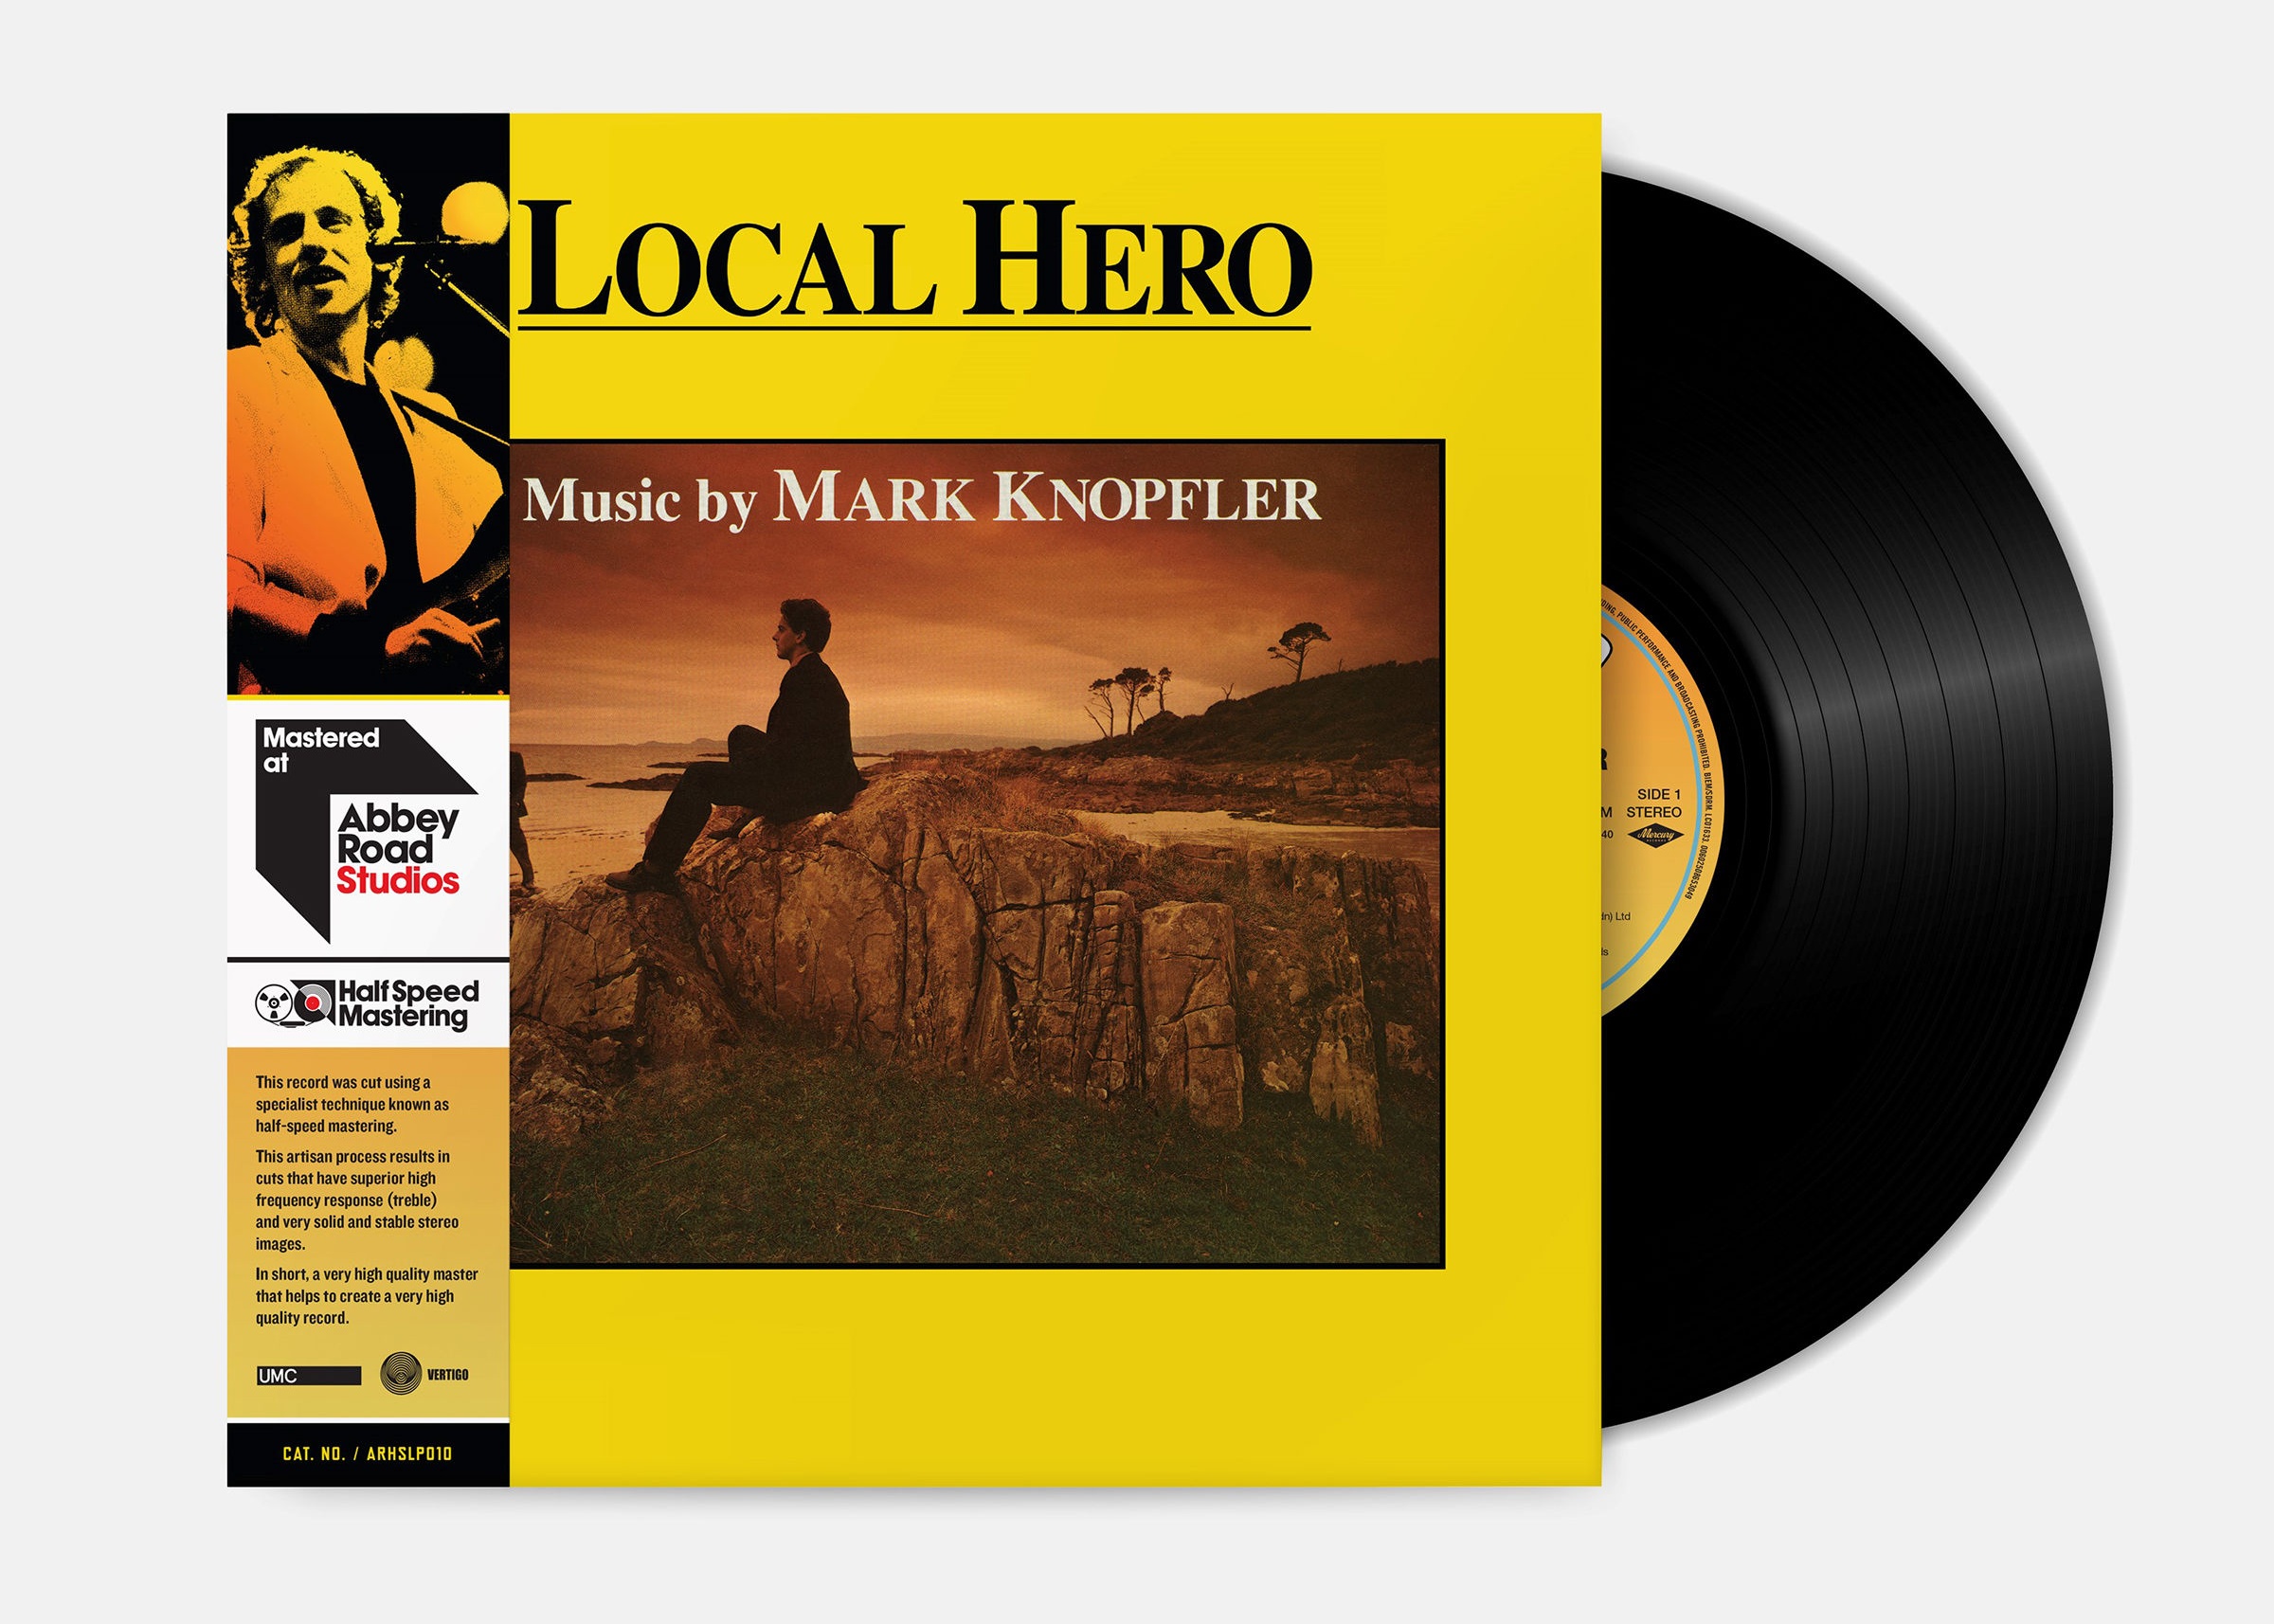 Mark Knopfler - "Local Hero" Half-Speed Master vinyl LP